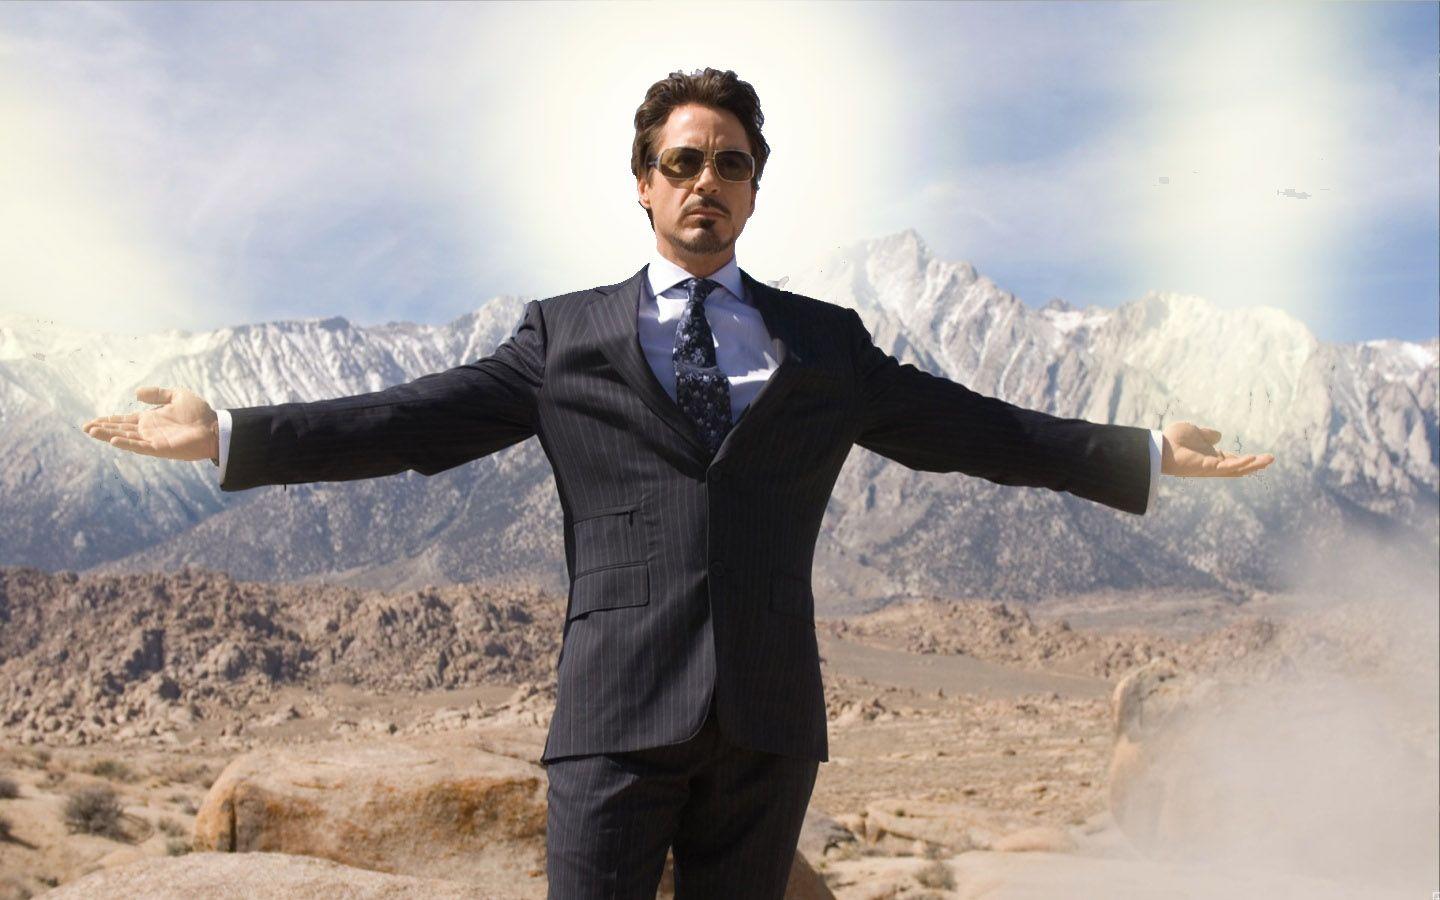 Being Iron Man IRL: How to (kinda) dress like Tony Stark every day